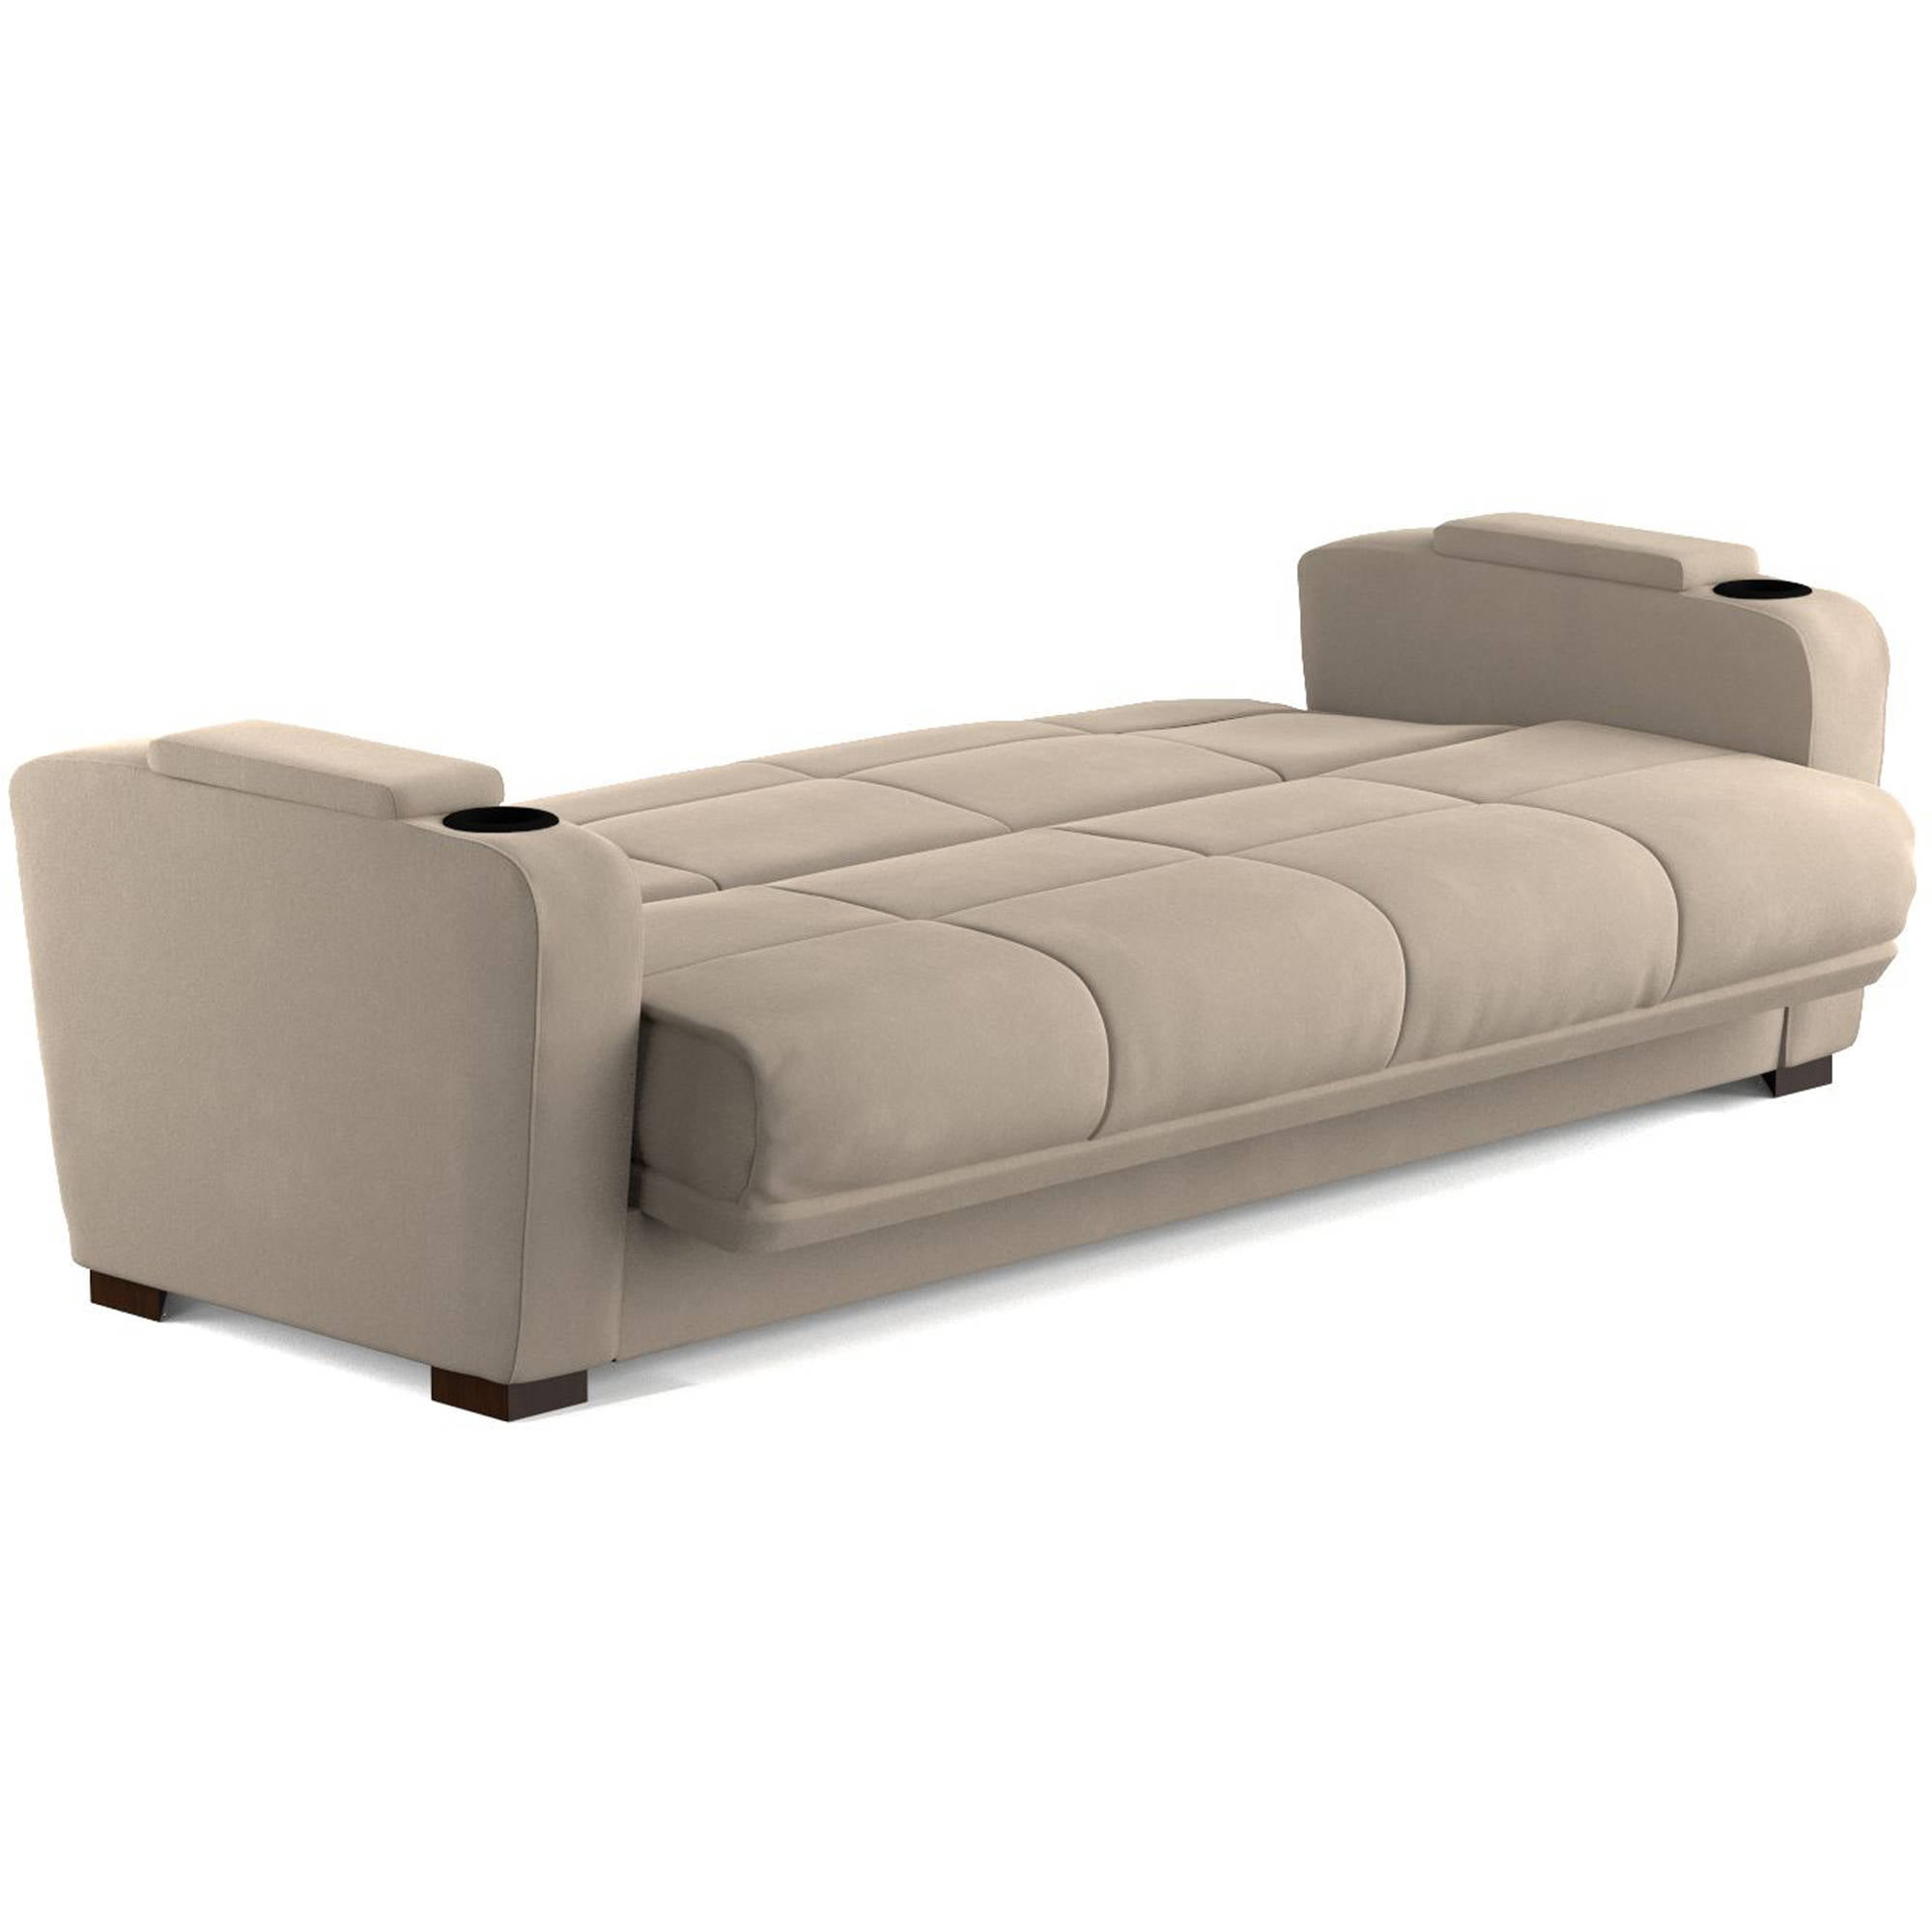 Mainstays Tyler Futon with Storage Sofa Sleeper Bed Multiple